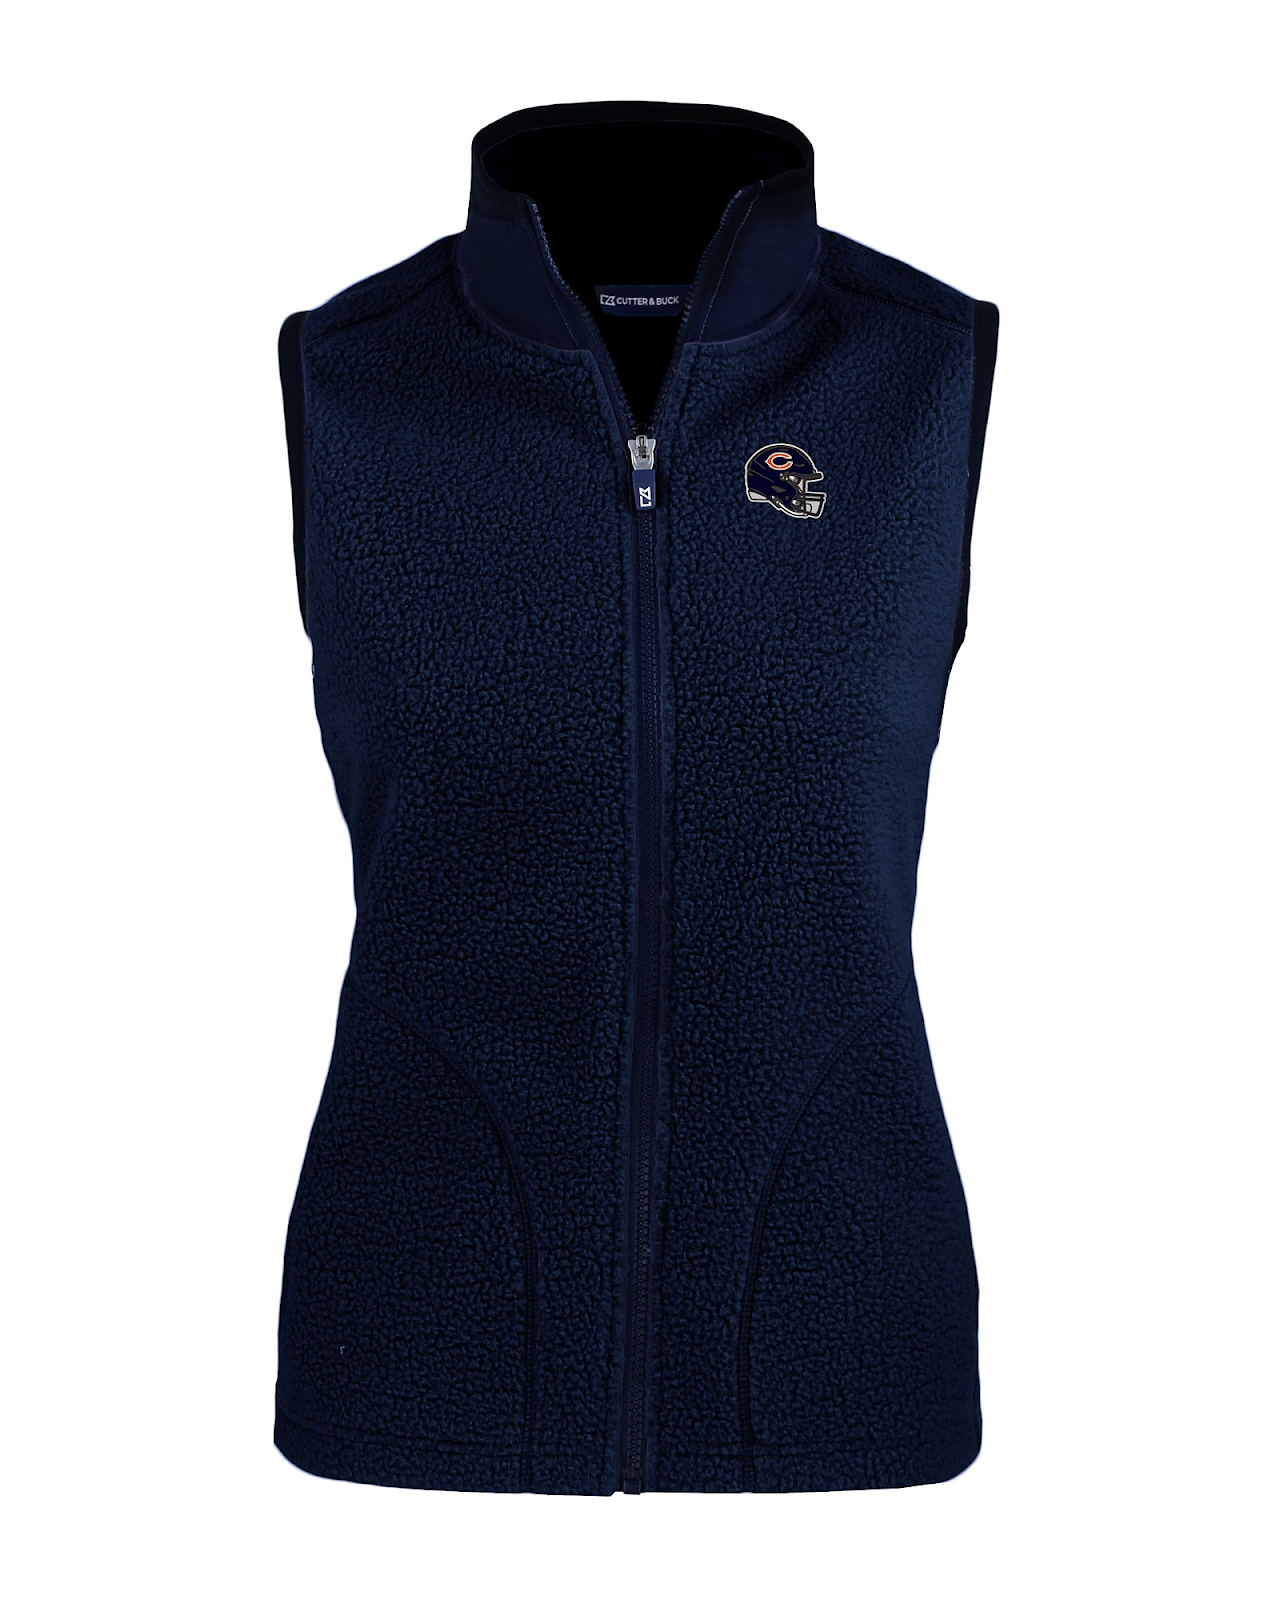 Women's Chicago Bears helmet logo sherpa fleece vest